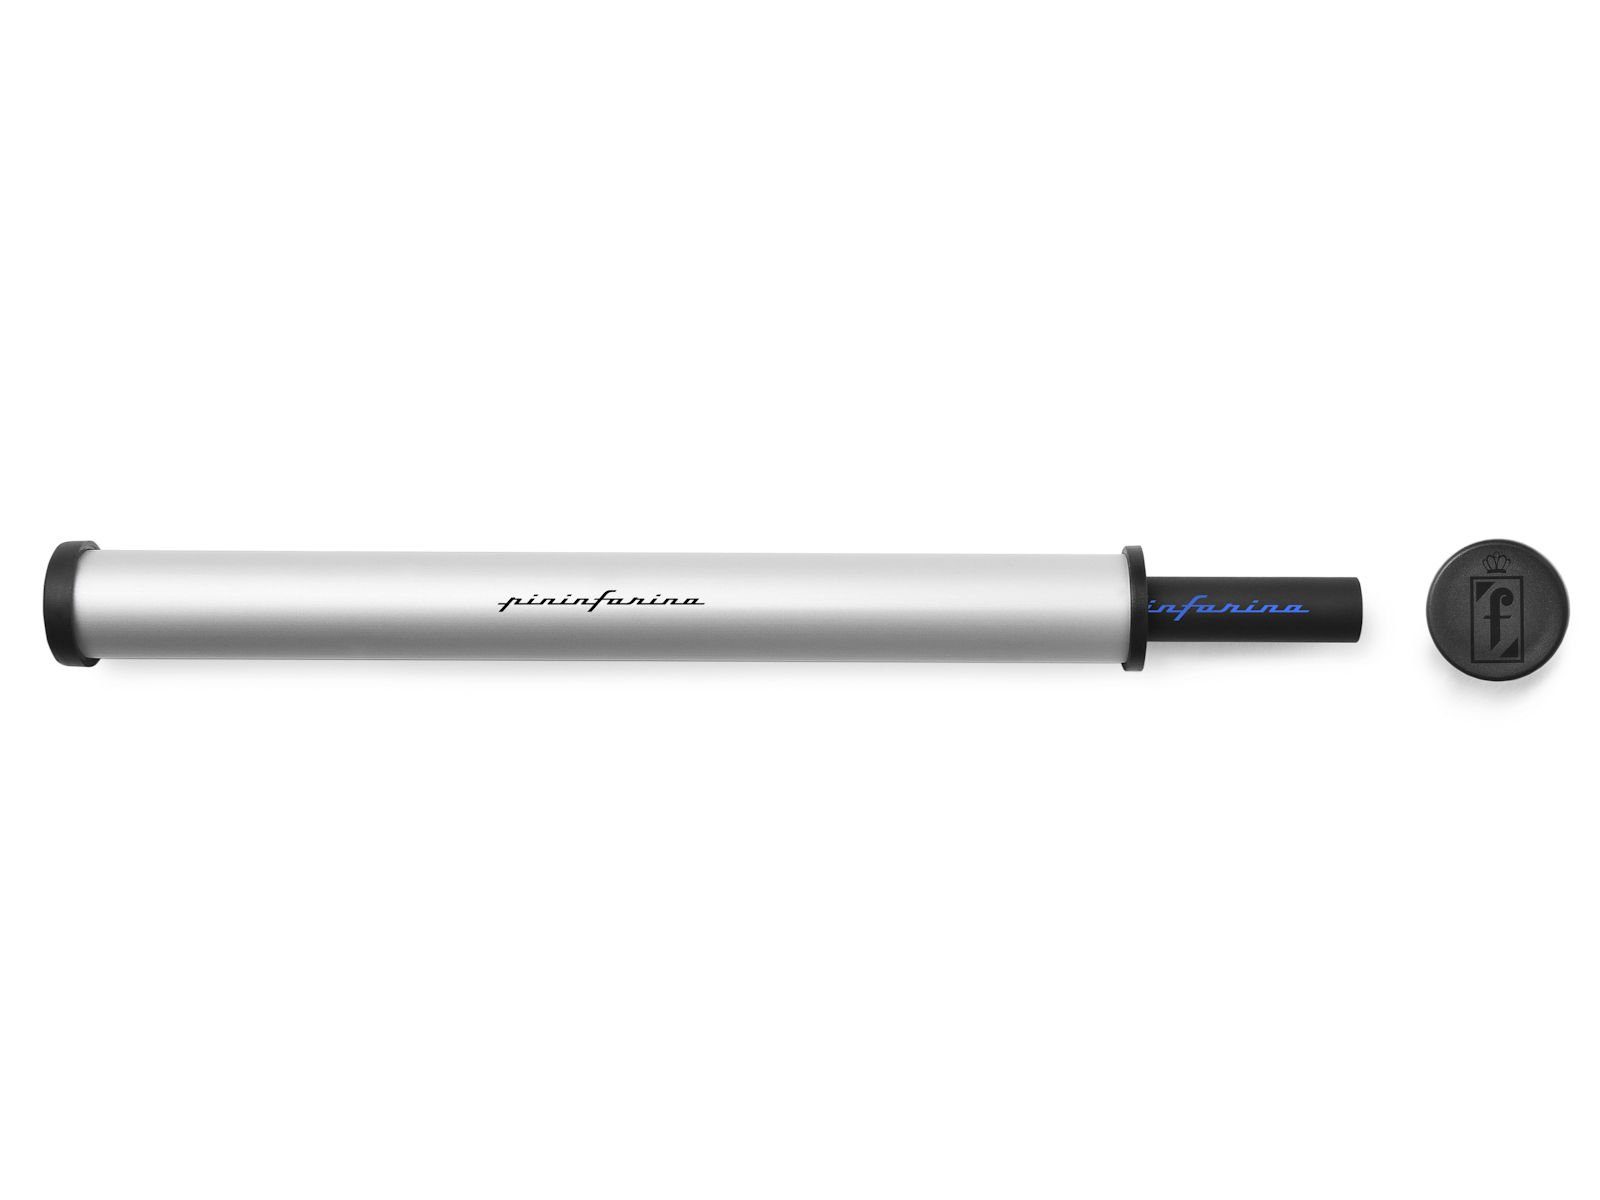 4 Grafeex Pencil Set) Bleistift Schreibgerät Pininfarina Farbe, Blau Bleistift Pininfarina Bleier (kein Smart